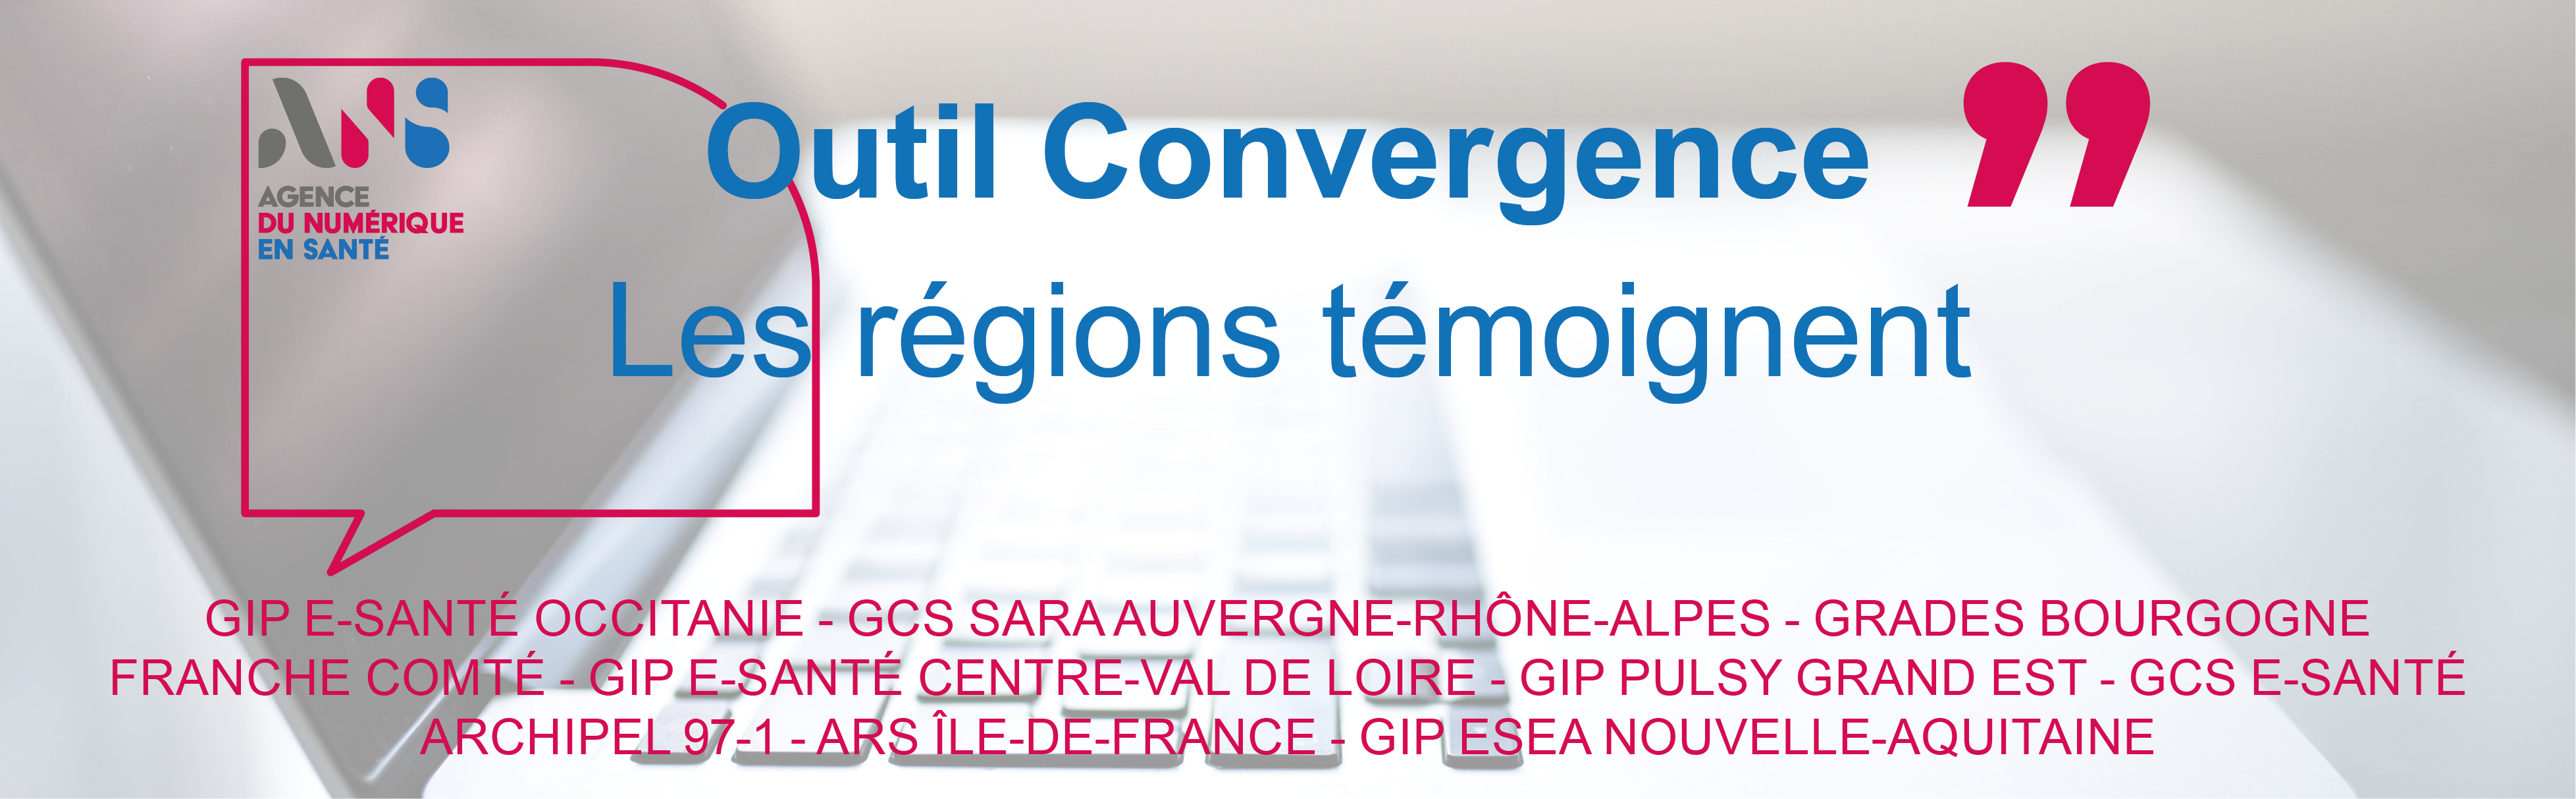 Convergence_Témoignage_Régions.jpg